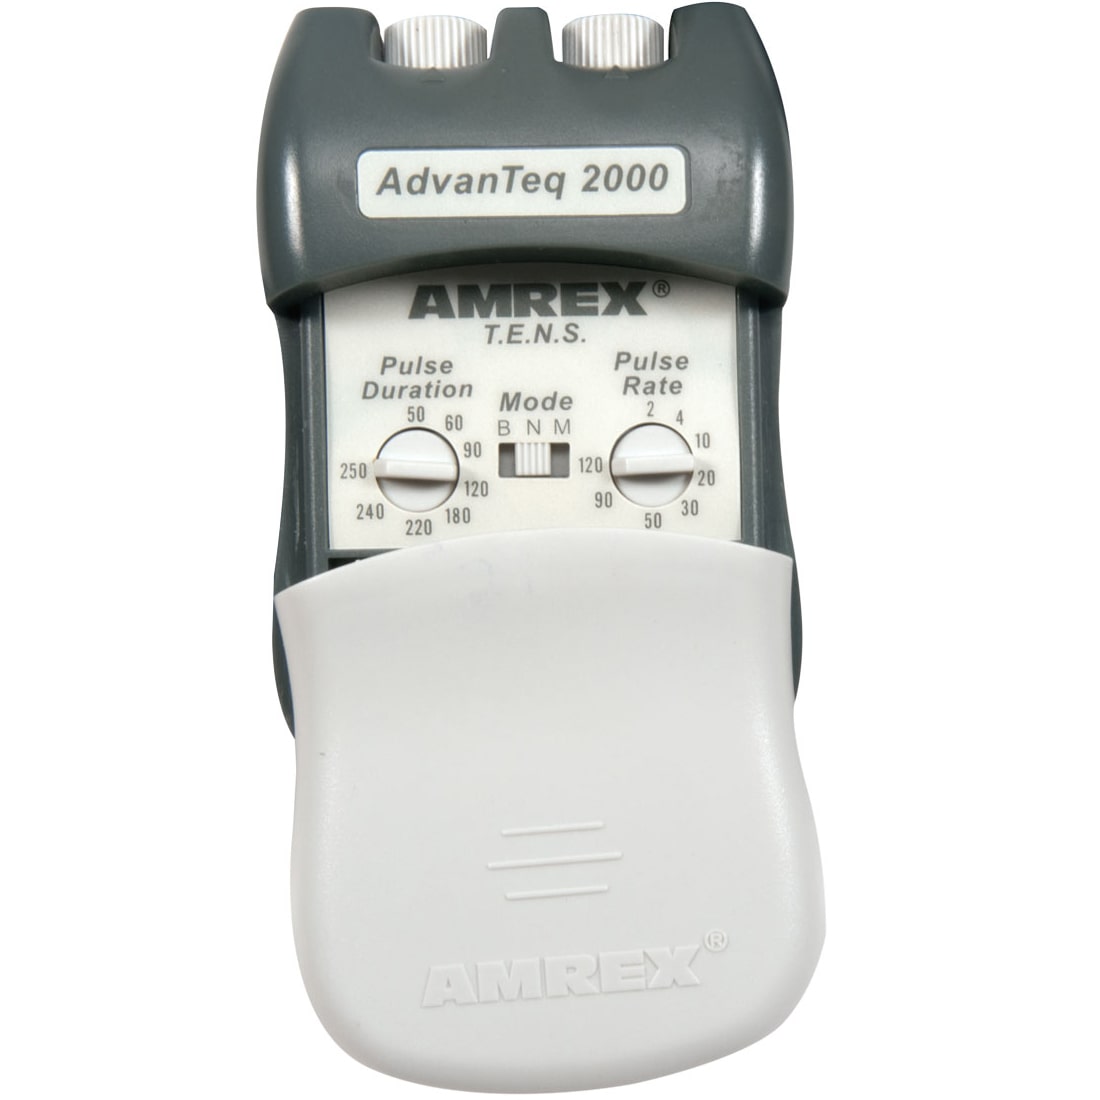 Amrex AdvanTeq 2000 Dual Channel TENS controls